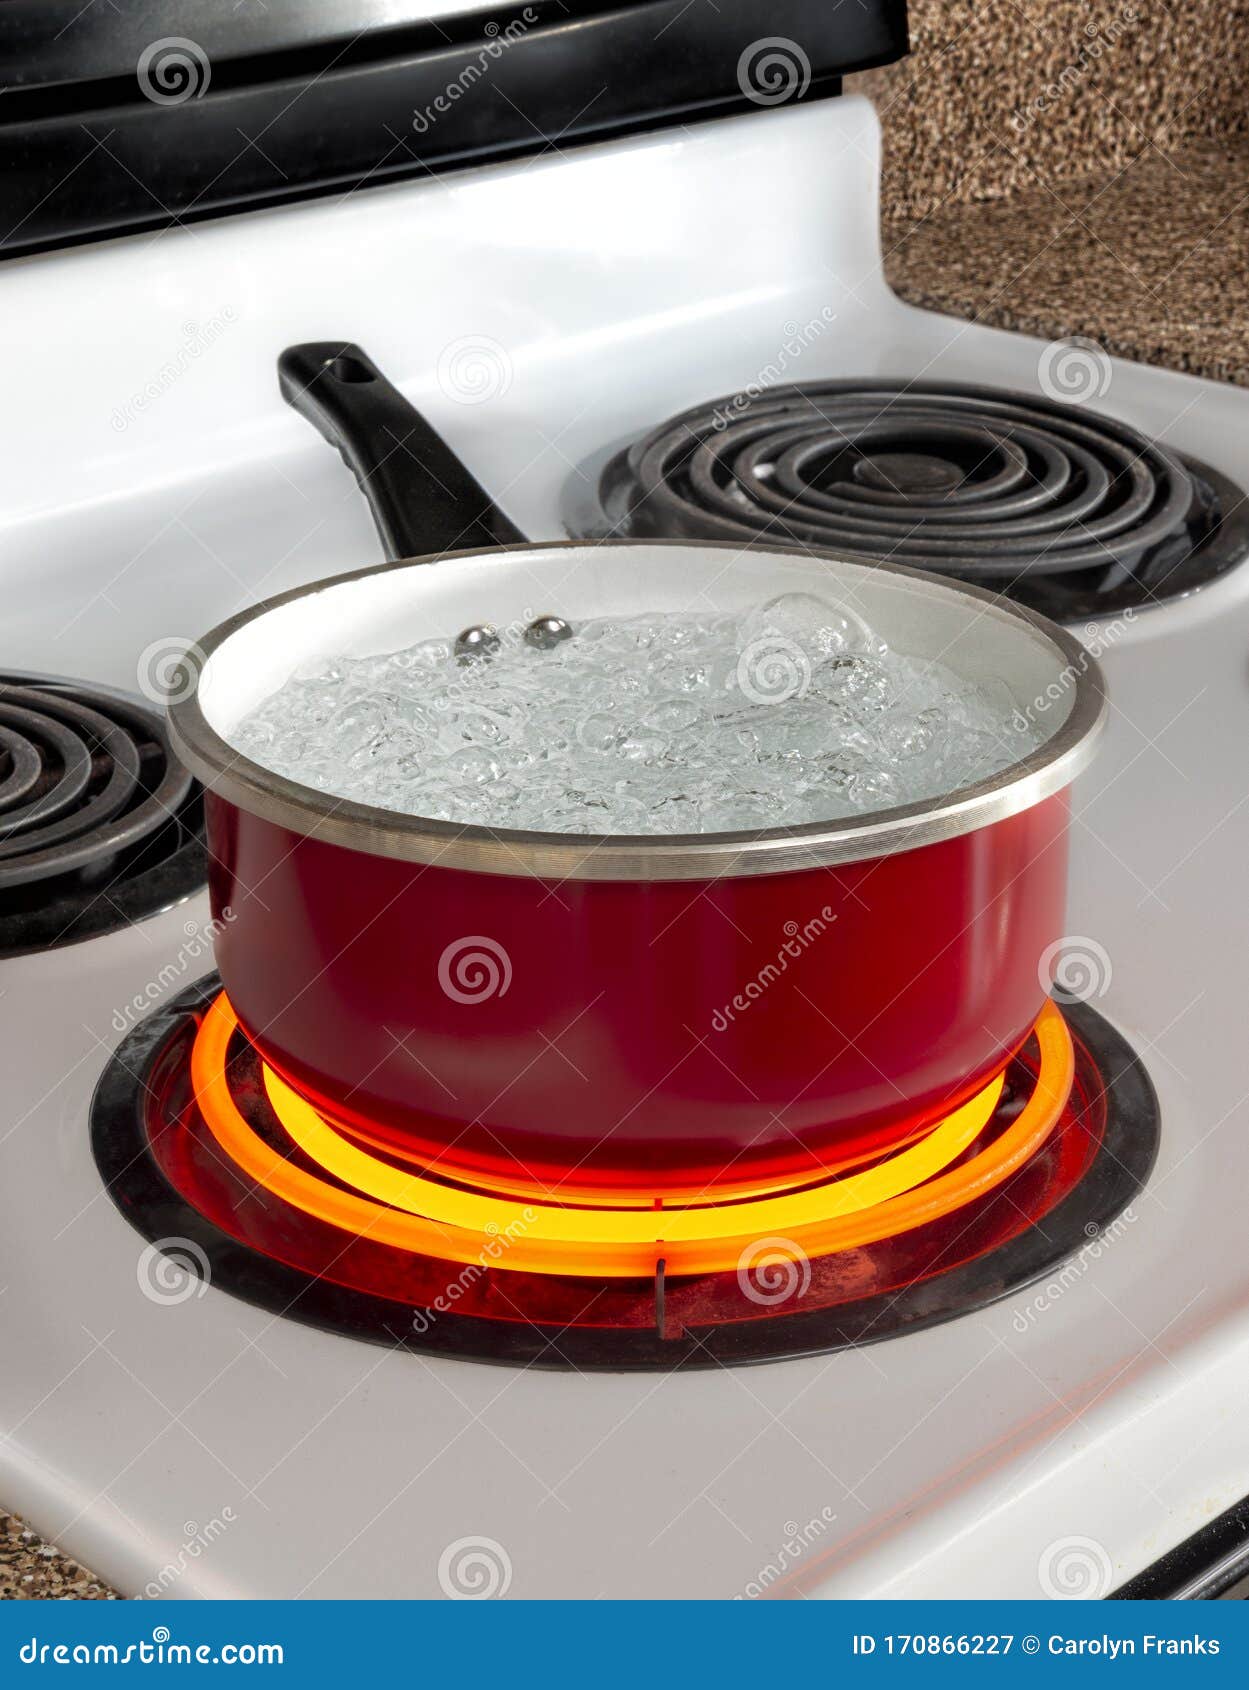 https://thumbs.dreamstime.com/z/red-pot-boiling-water-vertical-shot-pan-top-stove-burner-turned-to-high-170866227.jpg